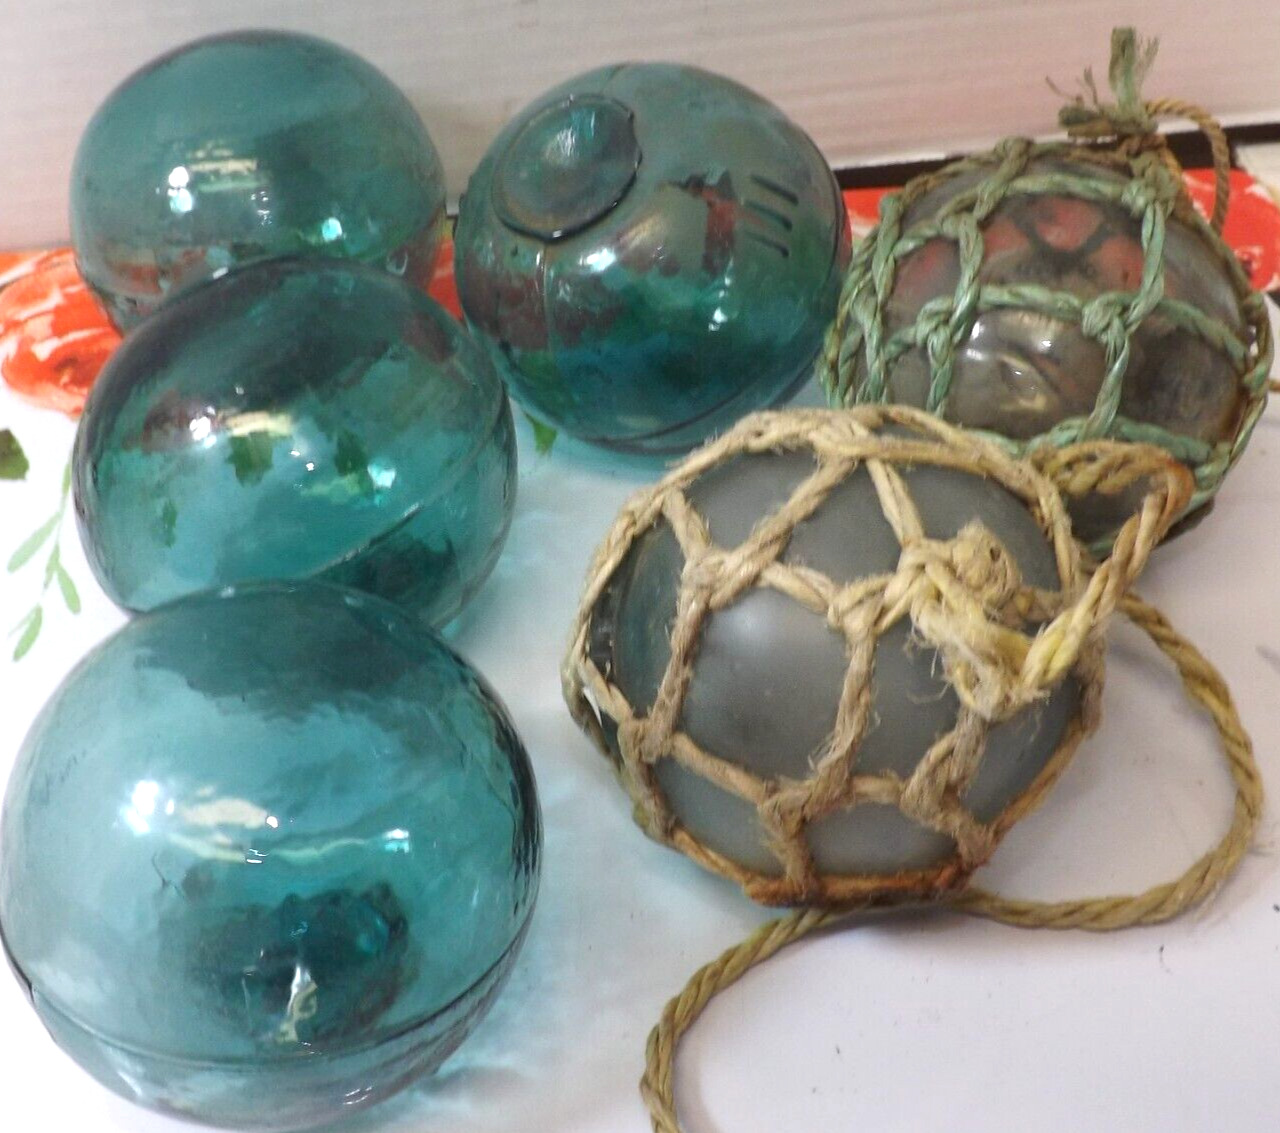 6 Japanese Glass Ball Fishing Floats lot Netting 3.5 Auth Japan Buoy Wake Island